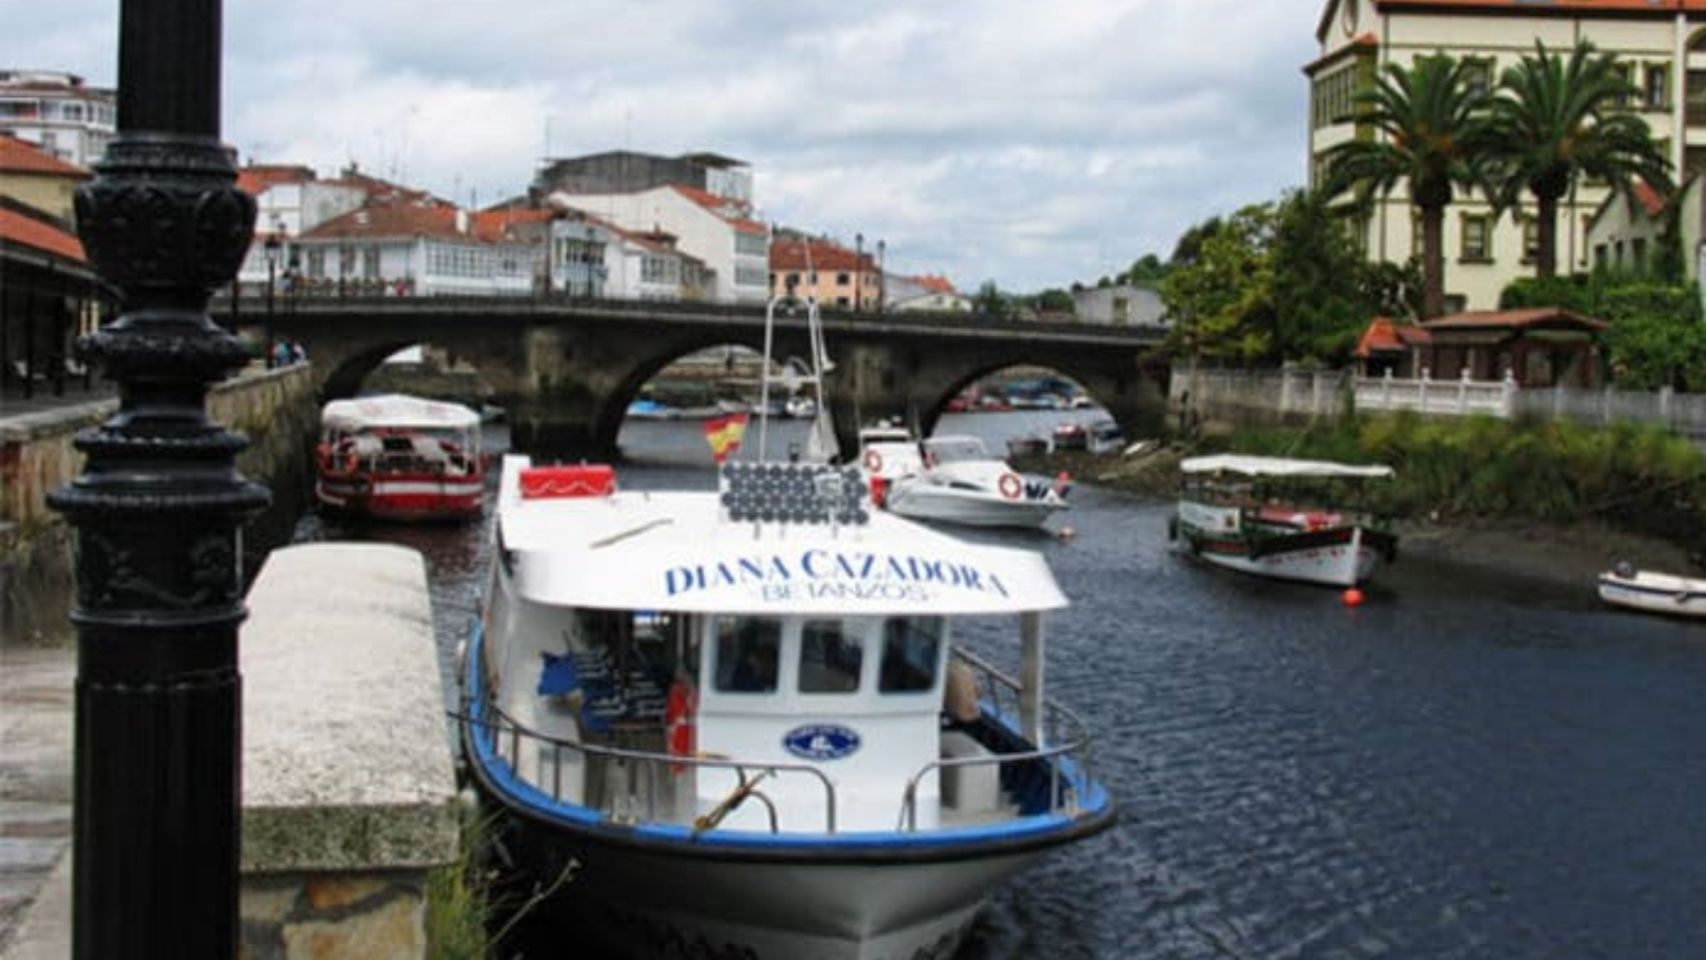 La embarcación municipal
"Diana Cazadora".